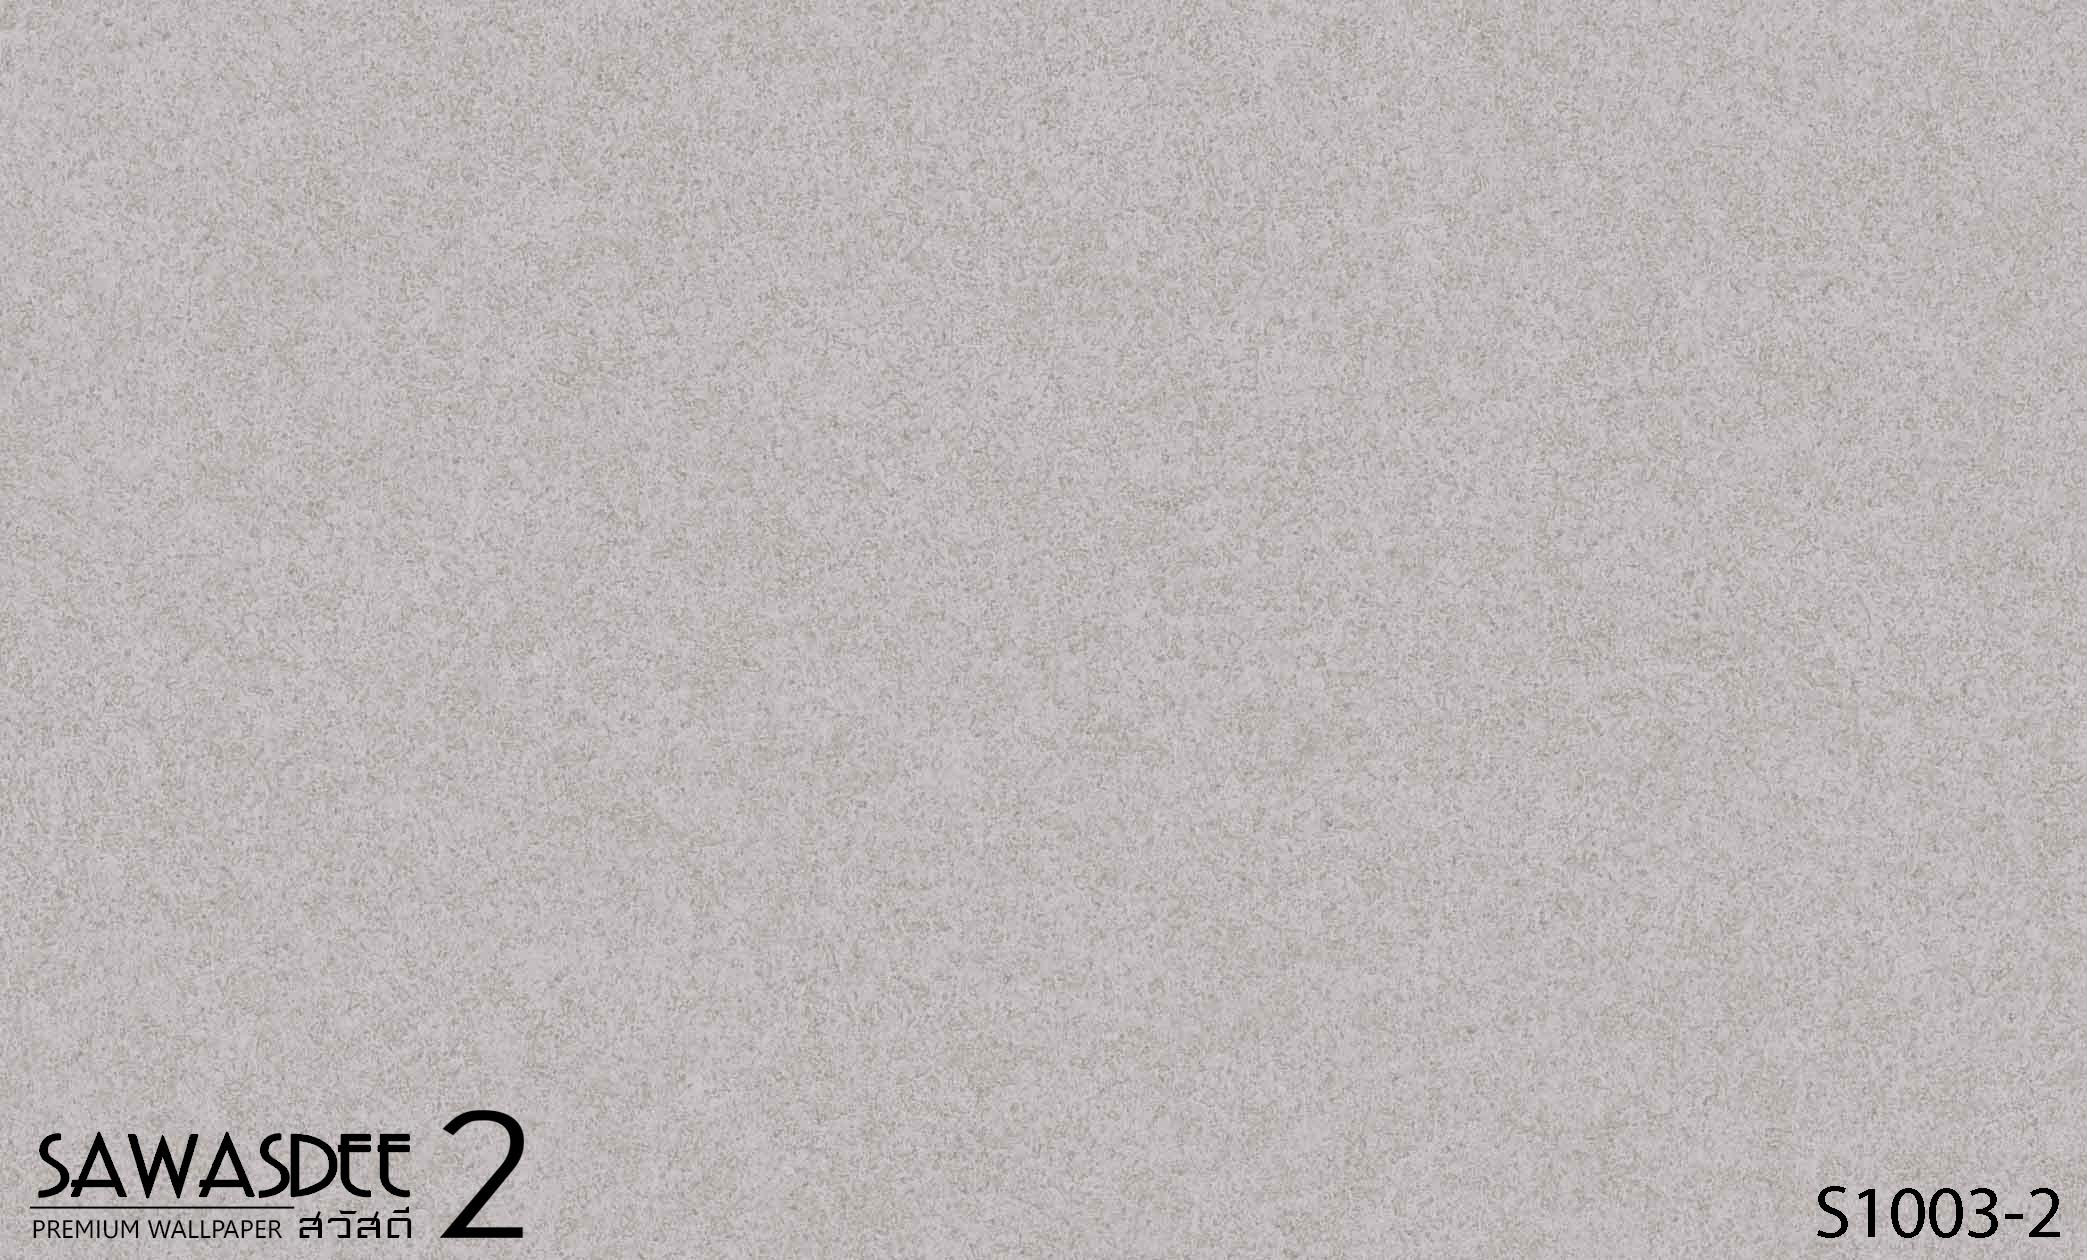 Wallpaper (SAWASDEE 2) S1003-2